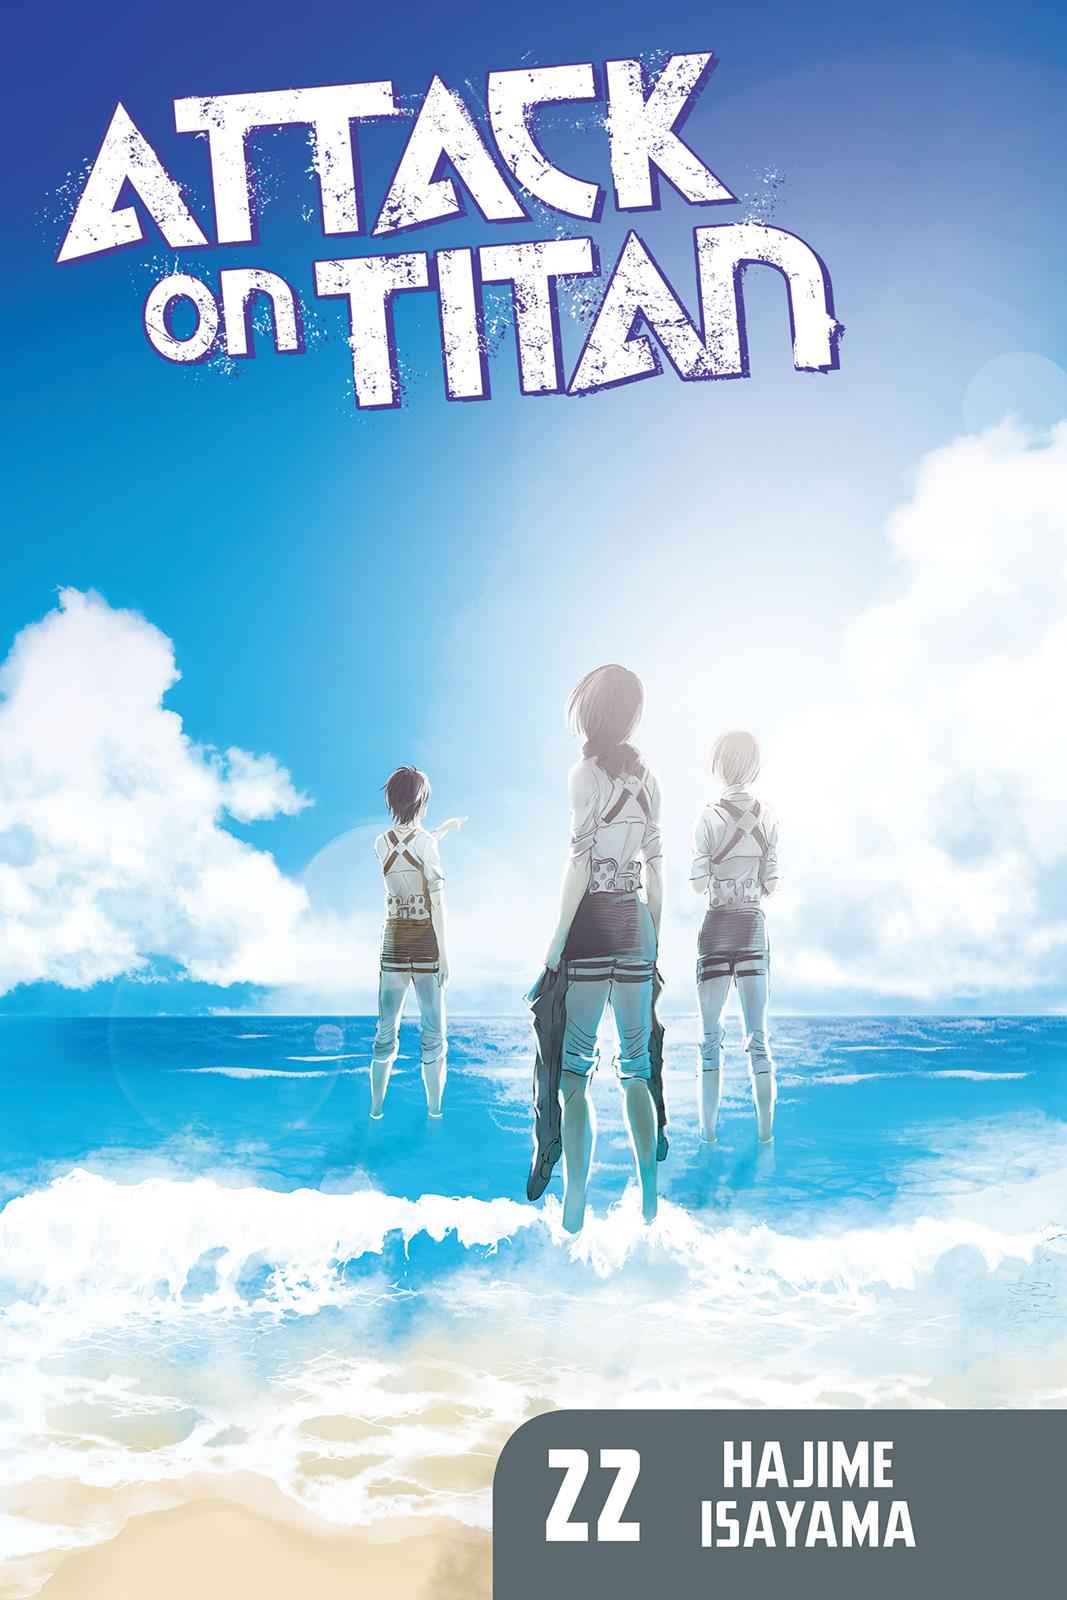 Shingeki no Kyojin Chapter 87 - Attack On Titan Manga Online